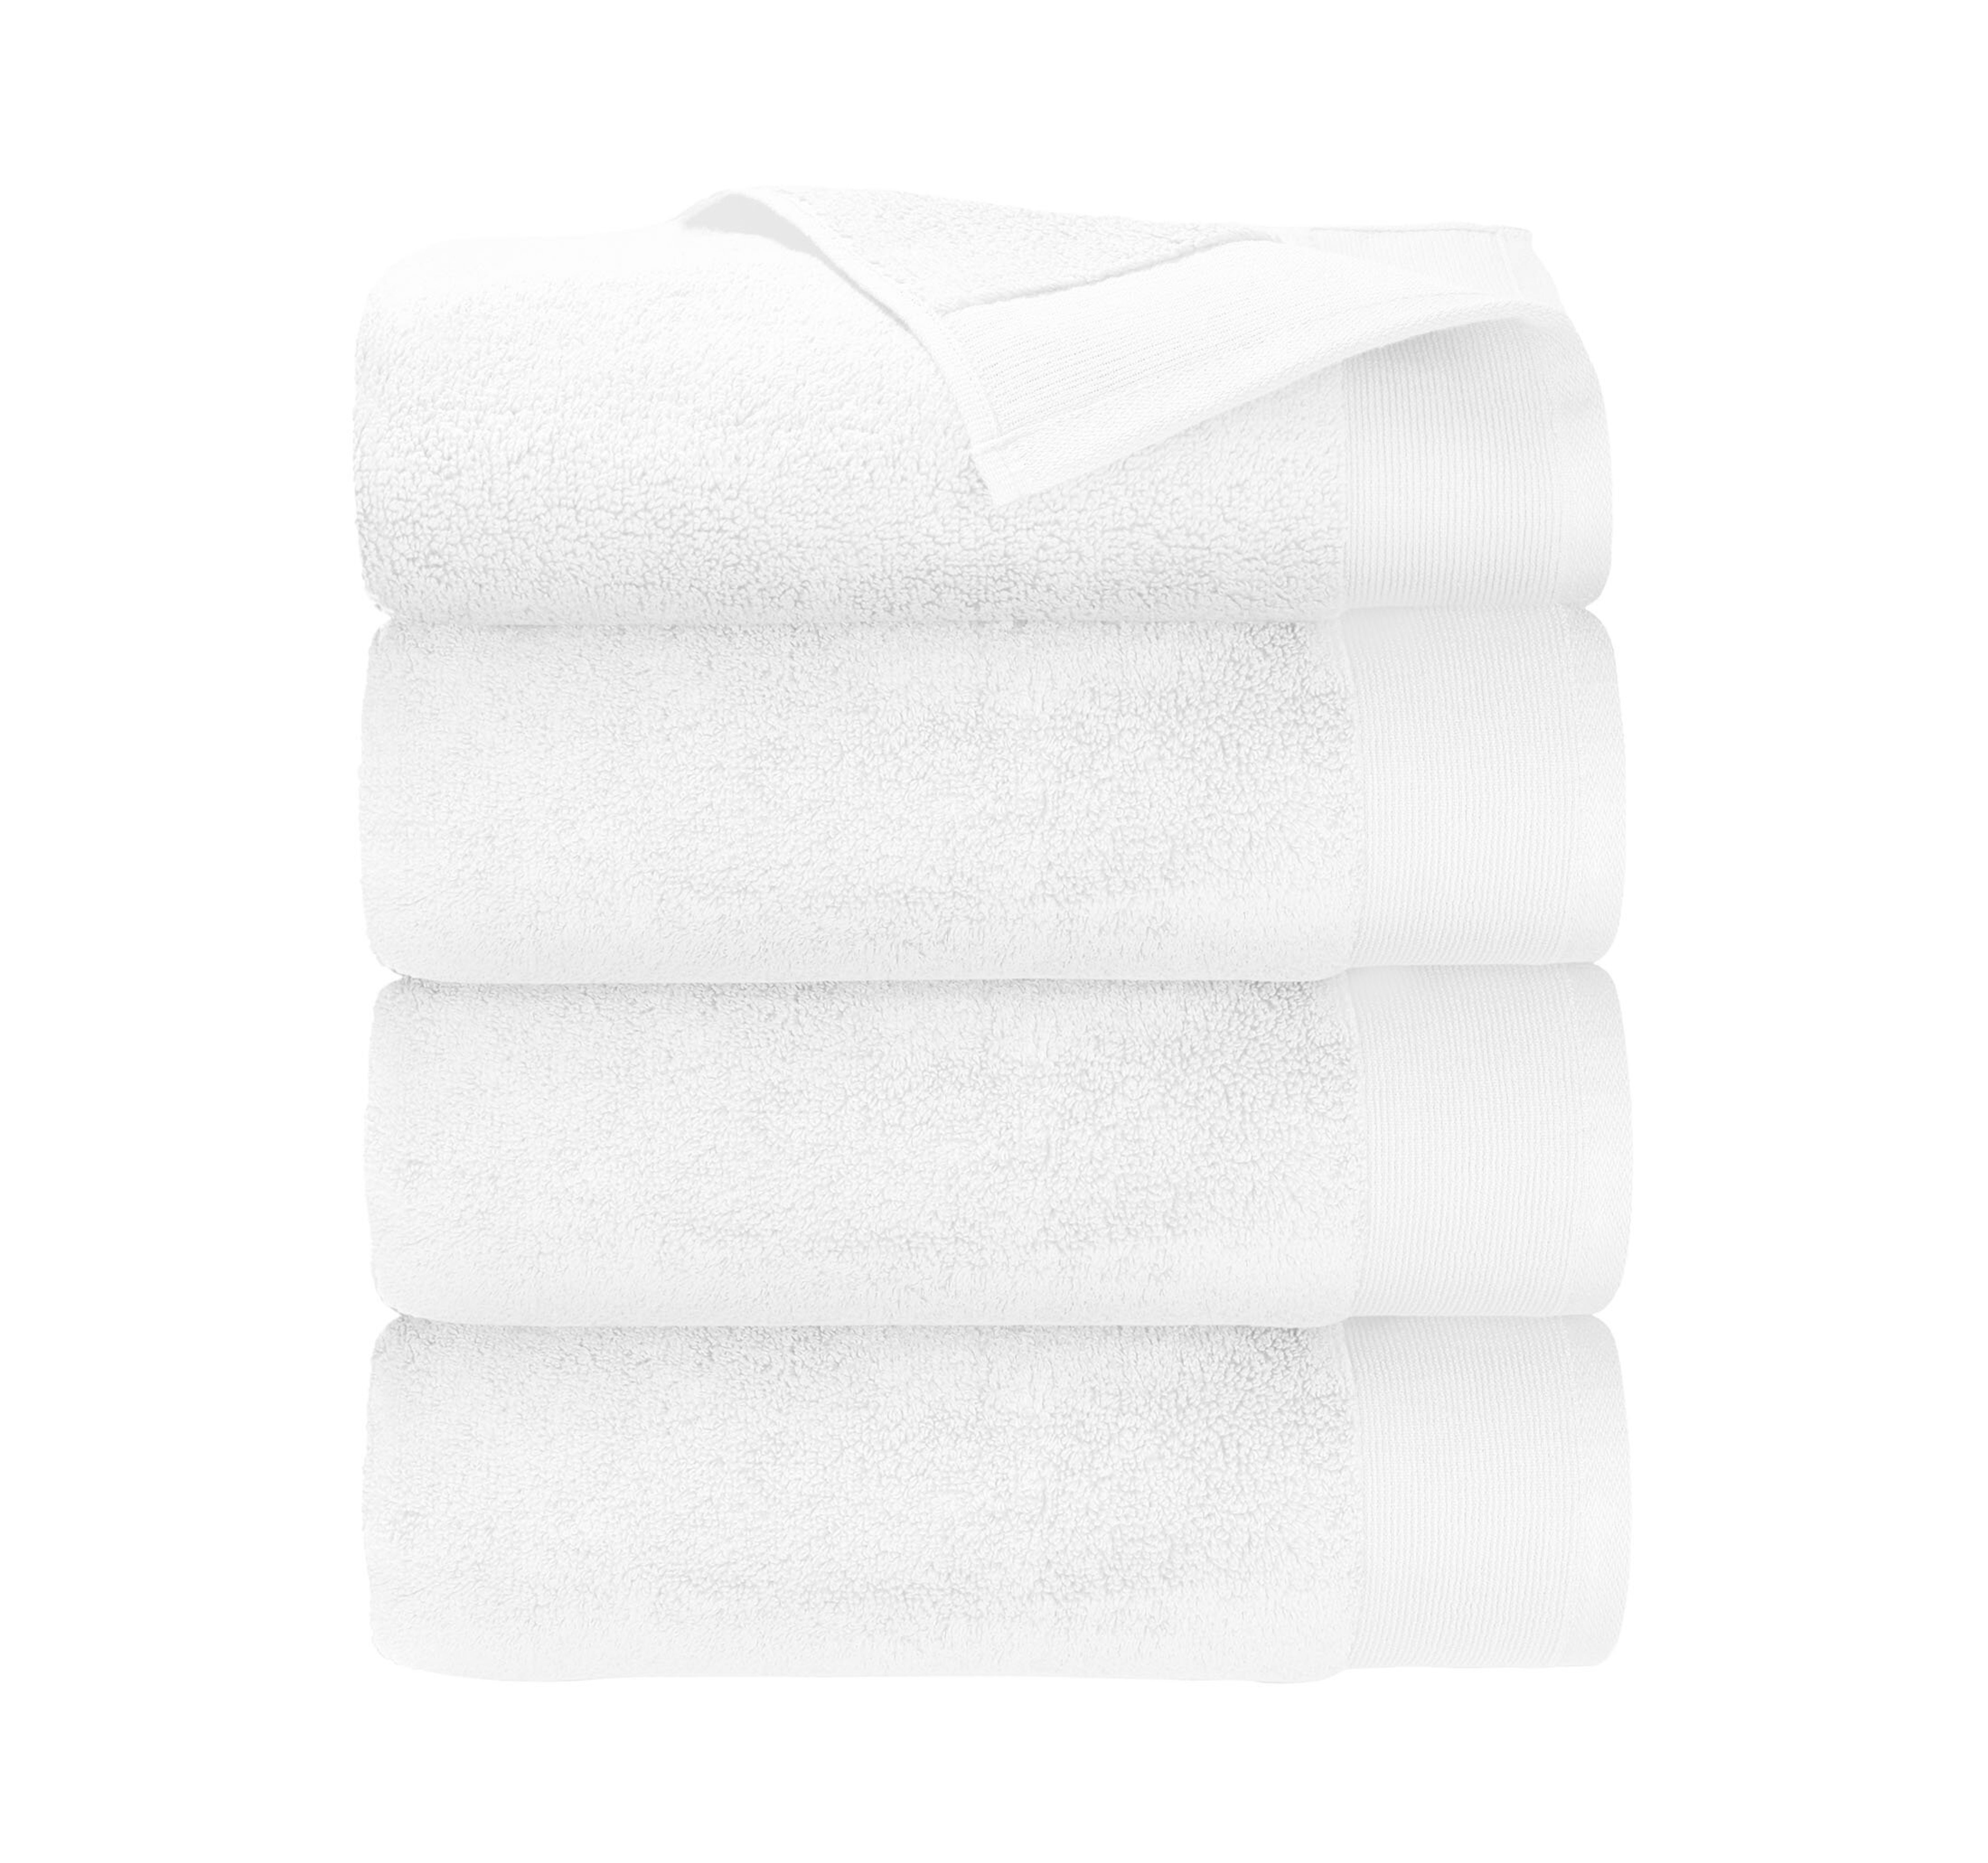 Effortless® Bedding SUPERSOFT Luxury Hotel & Spa Quality 100% Cotton Plush  4-Piece White Towel Set – Bath Towel, Hand Towel, Face Towel & Wash Mitt -  Effortless Bedding